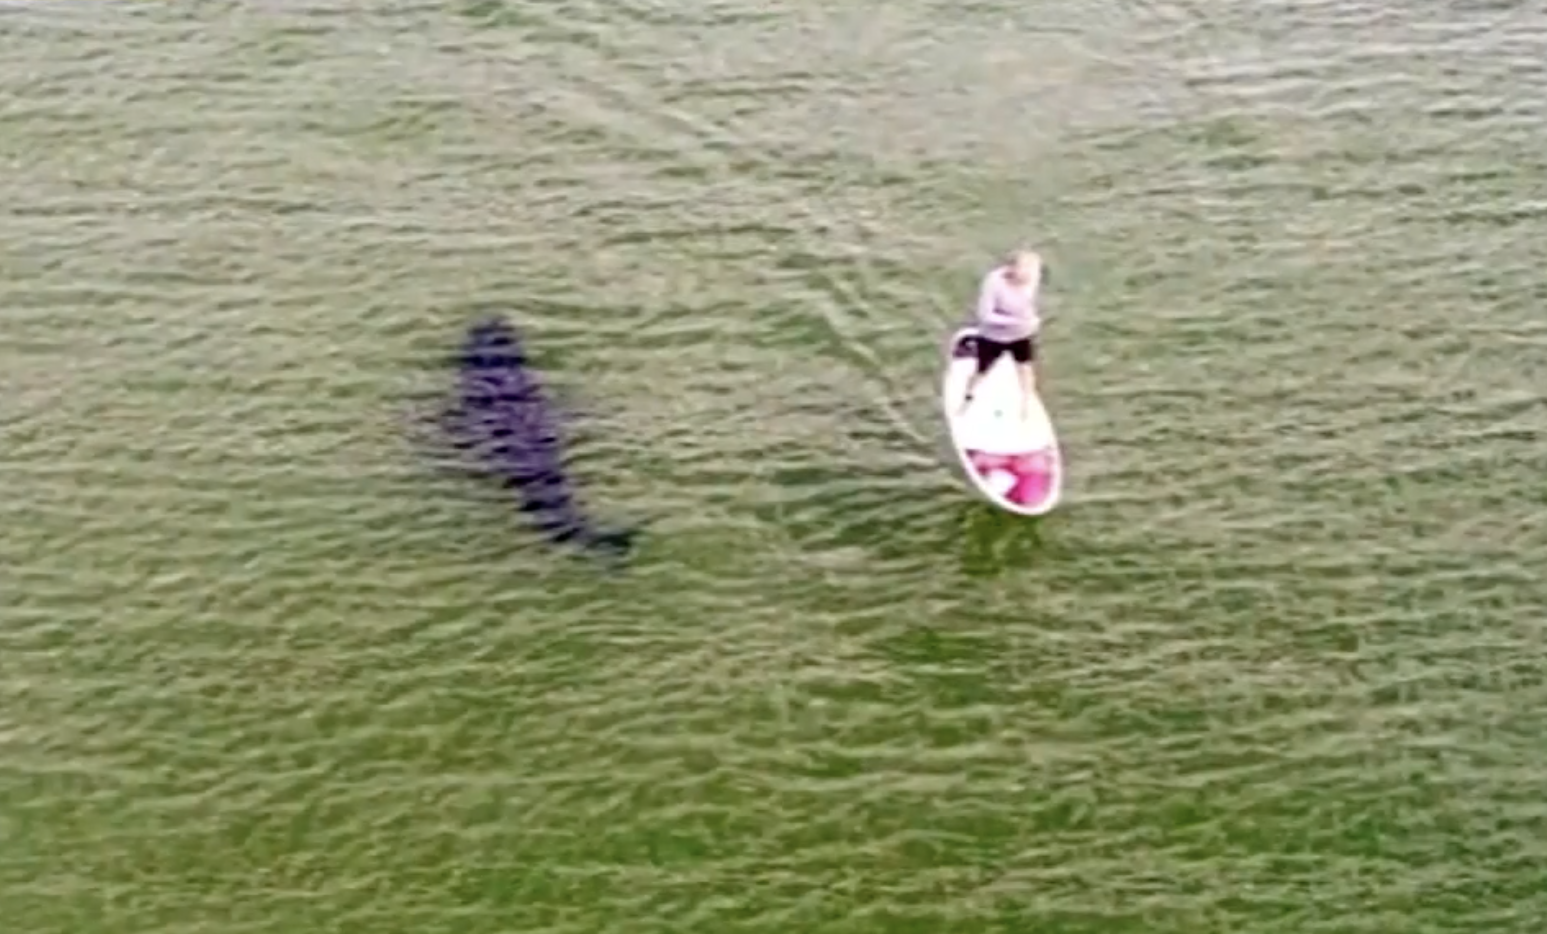 curious-shark-lingers-beneath-paddleboard